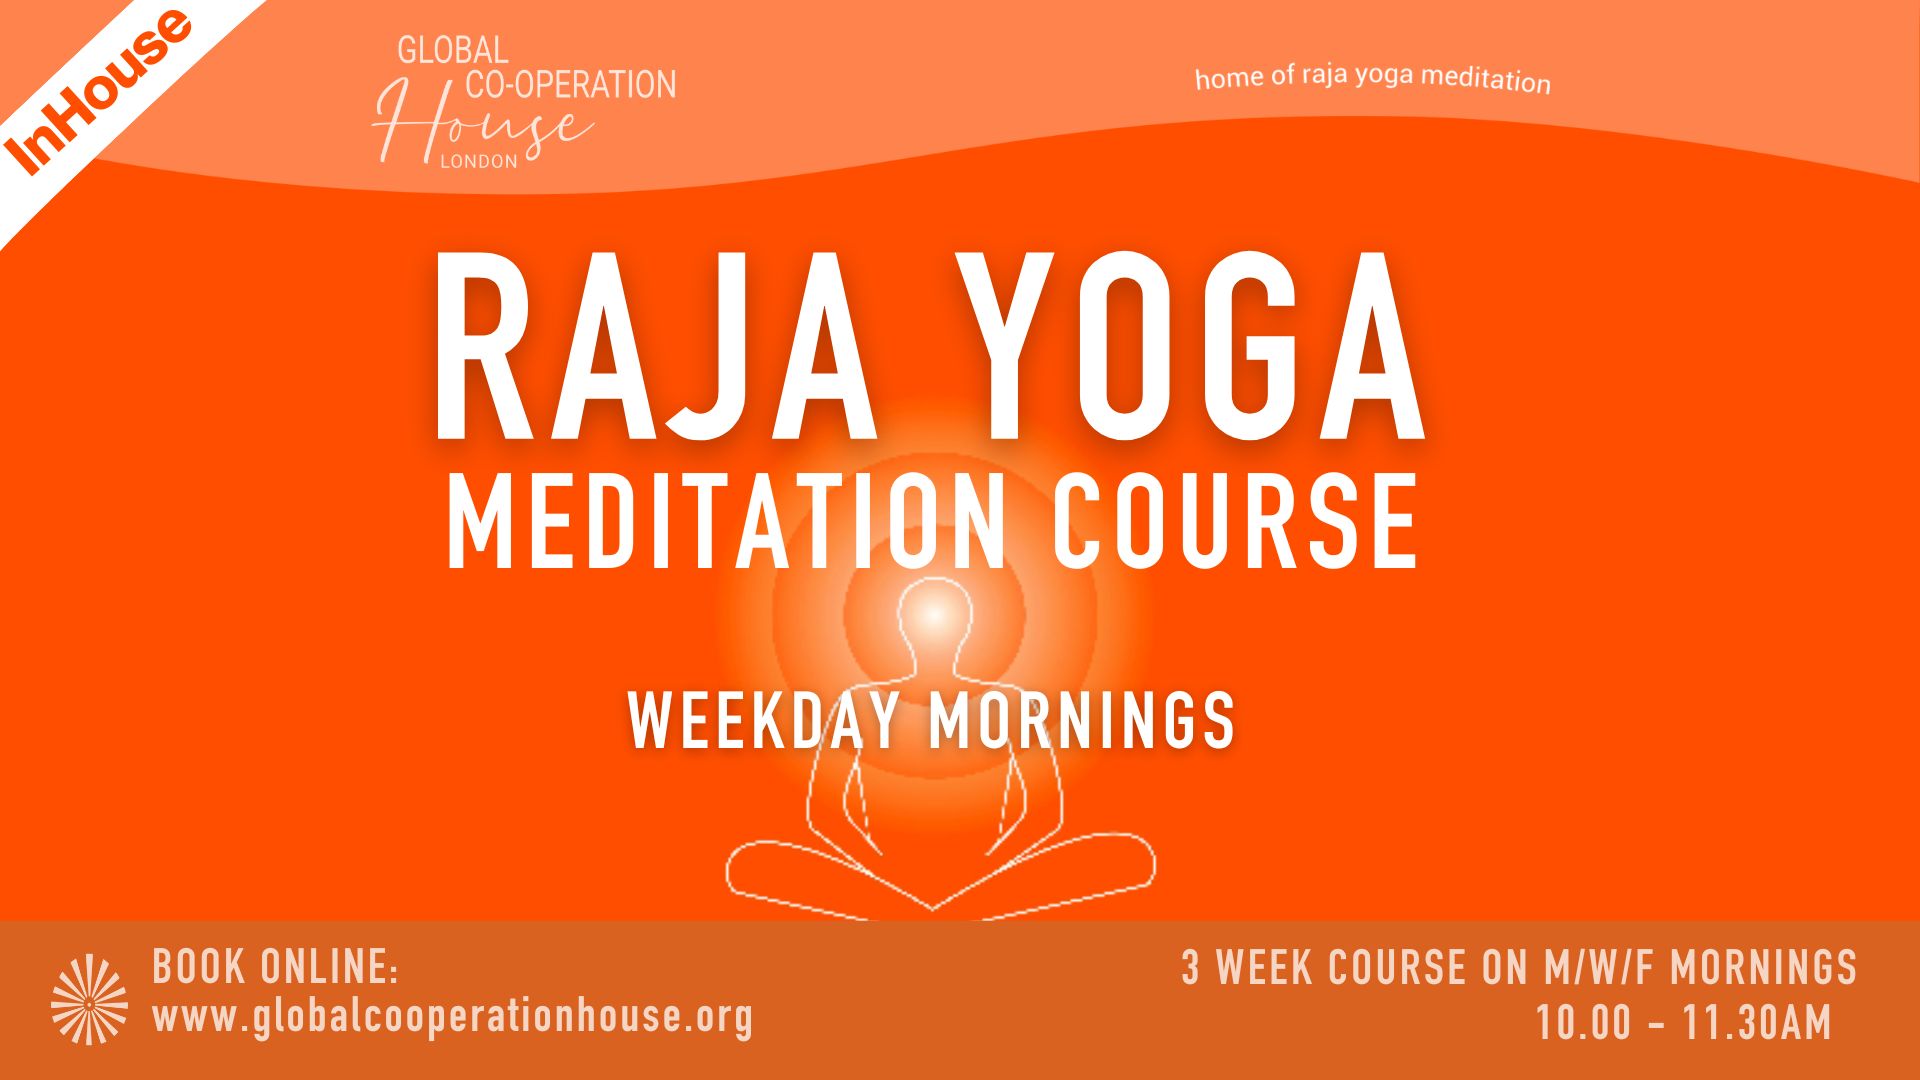 Raja Yoga Meditation Course - Weekday Mornings